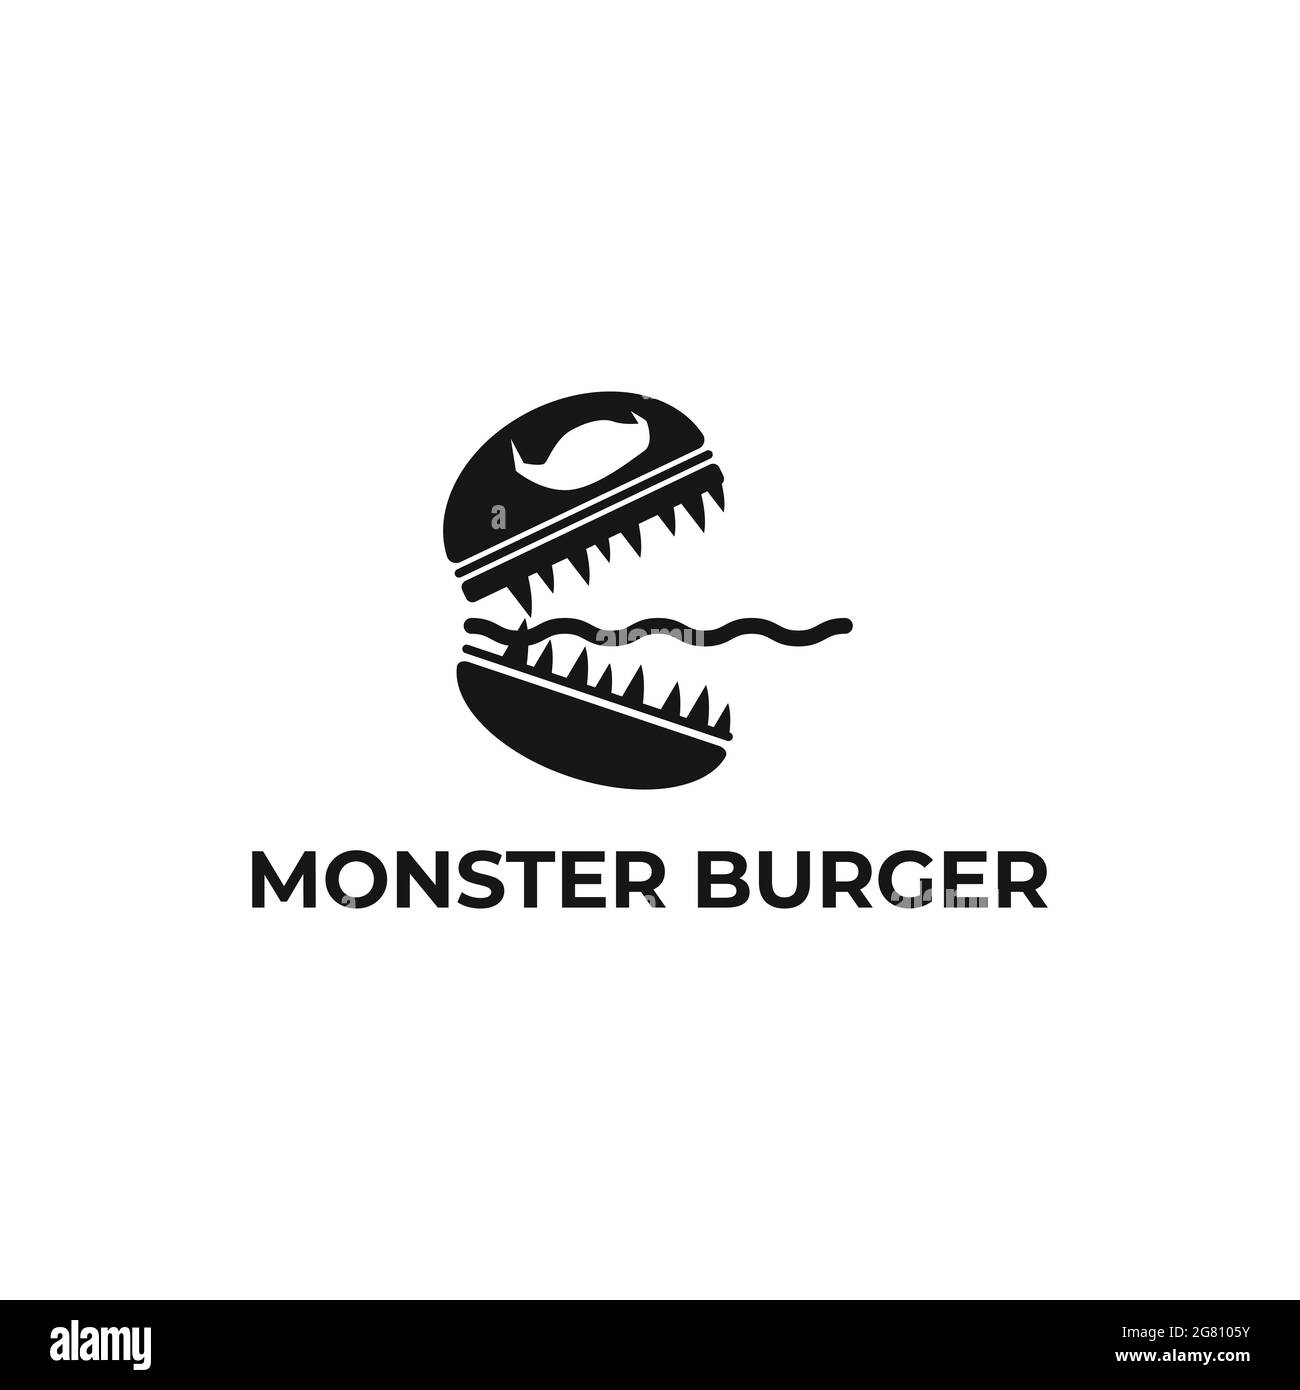 Burger monster logo. Hamburger restaurant design, flat design, big burger in the shape of a monster on a white background. Stock Vector